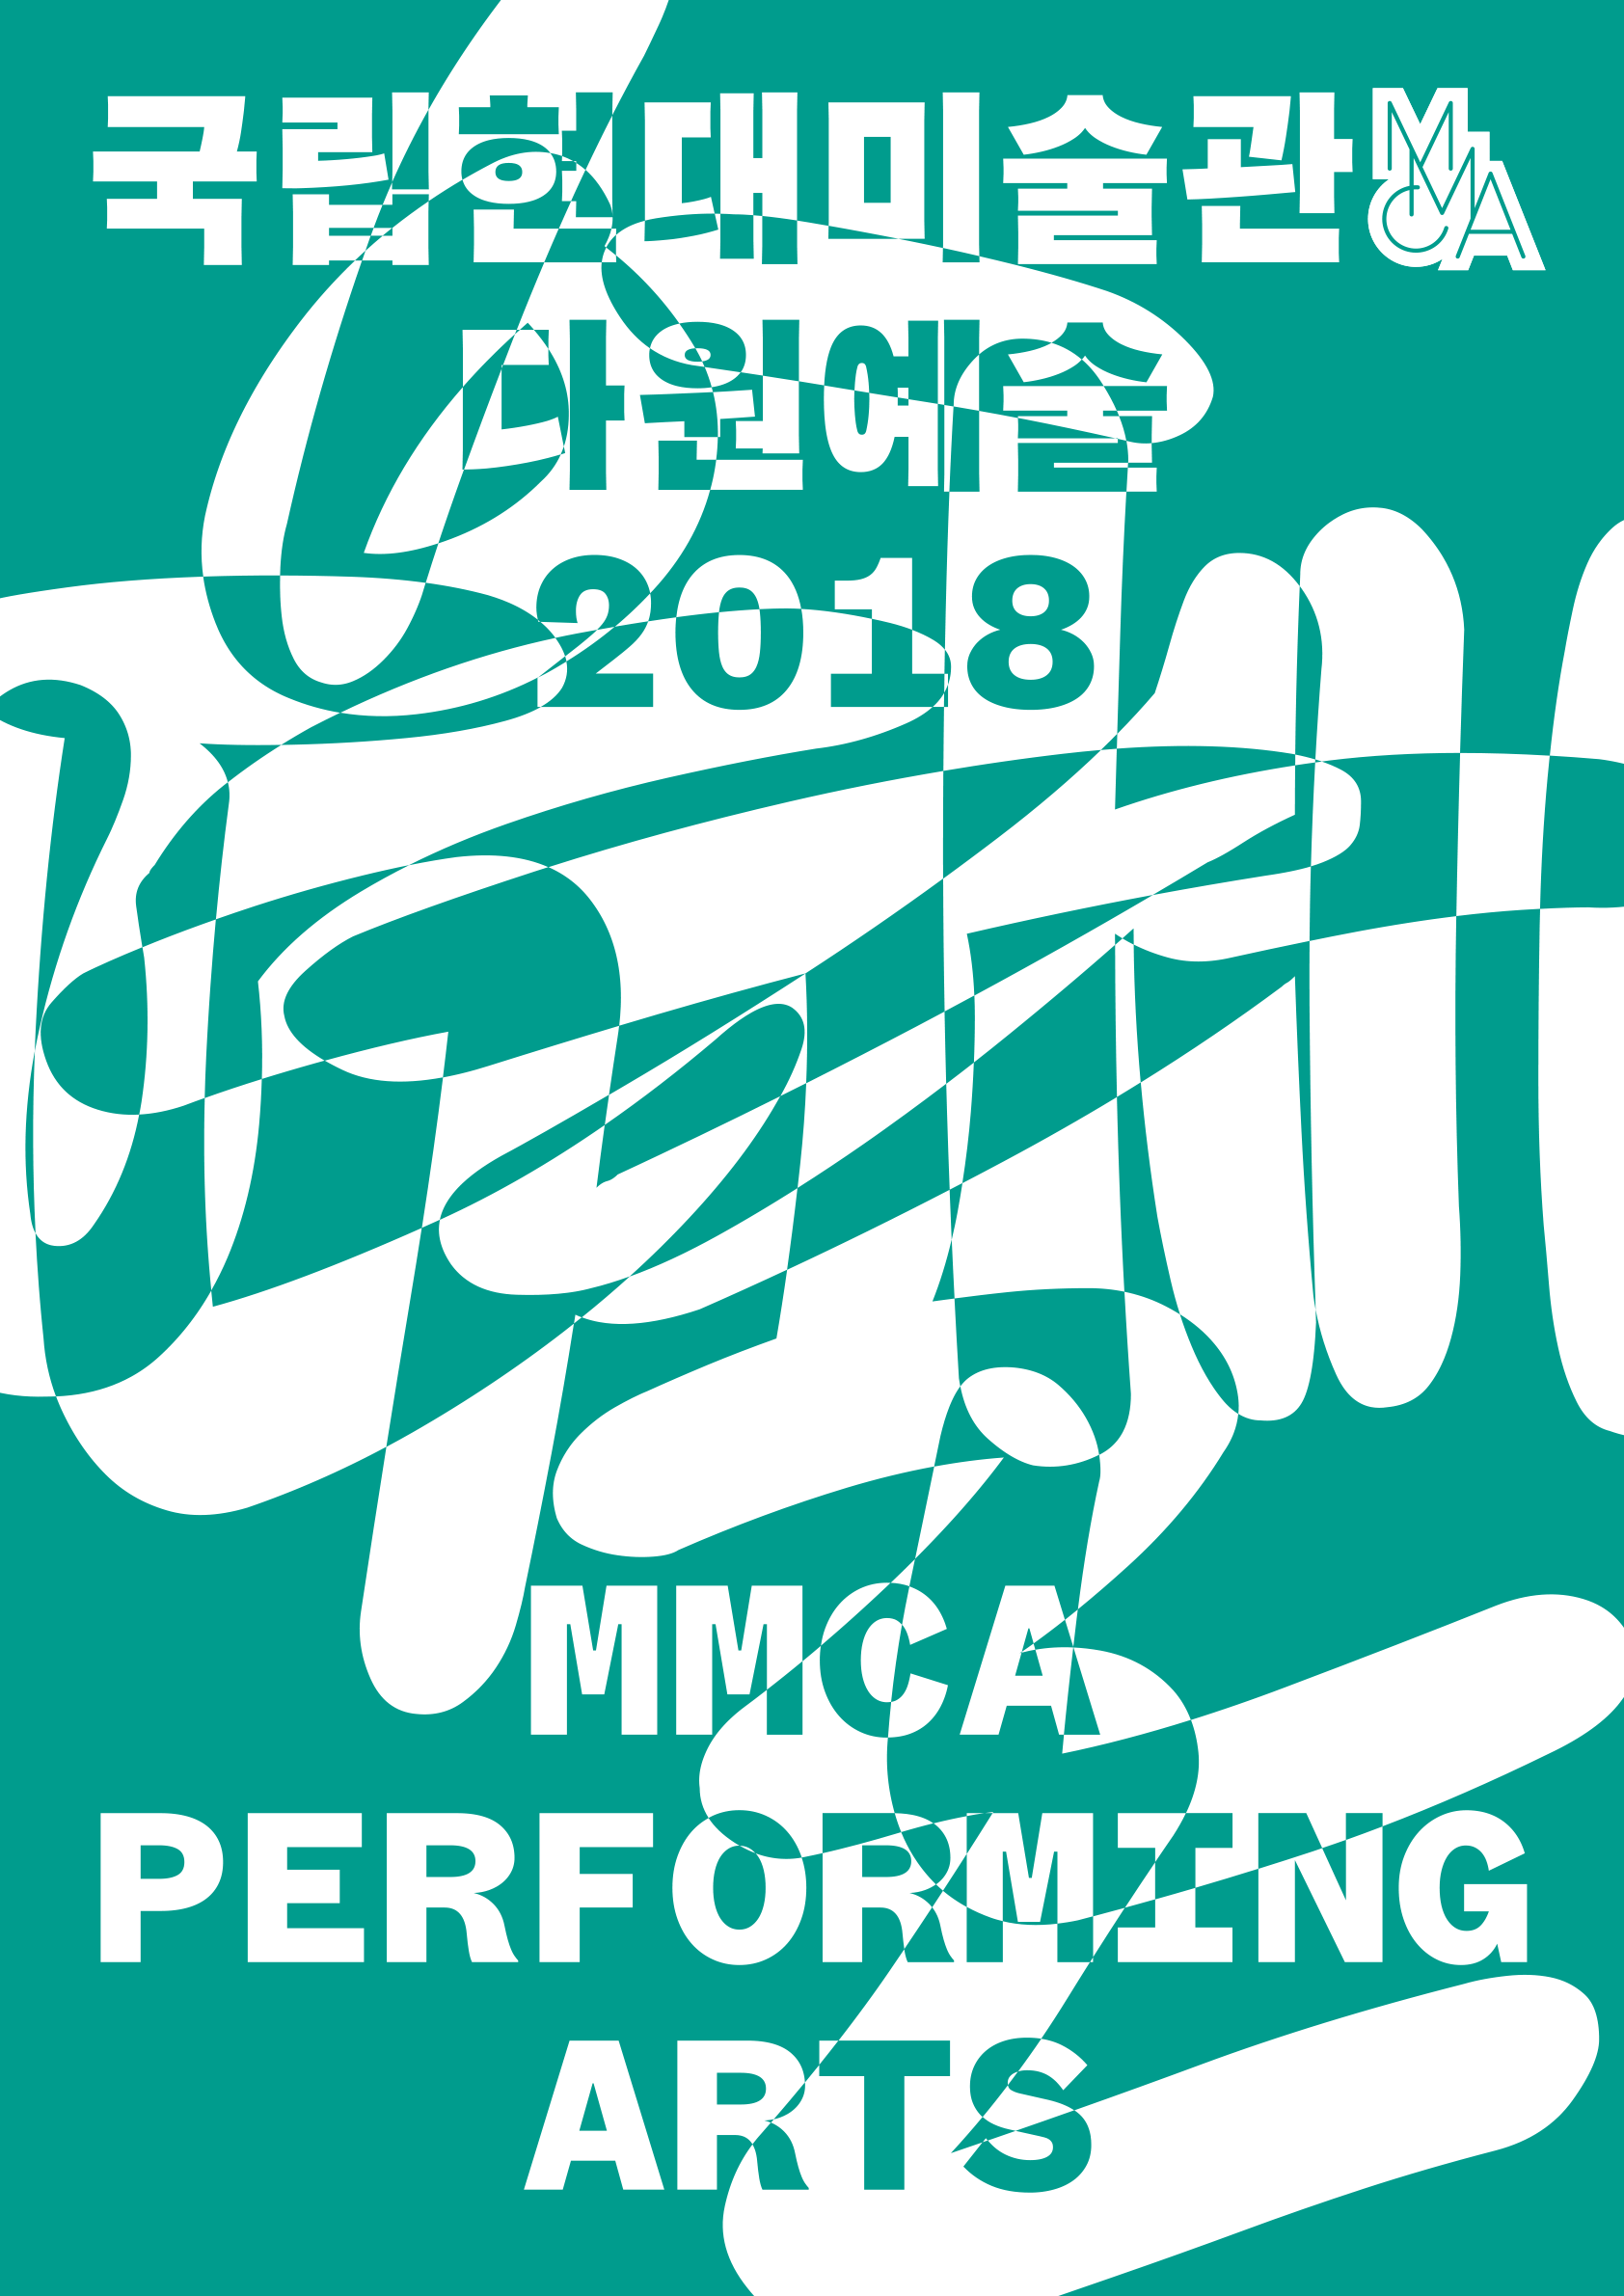 MMCA-2018-poster-print